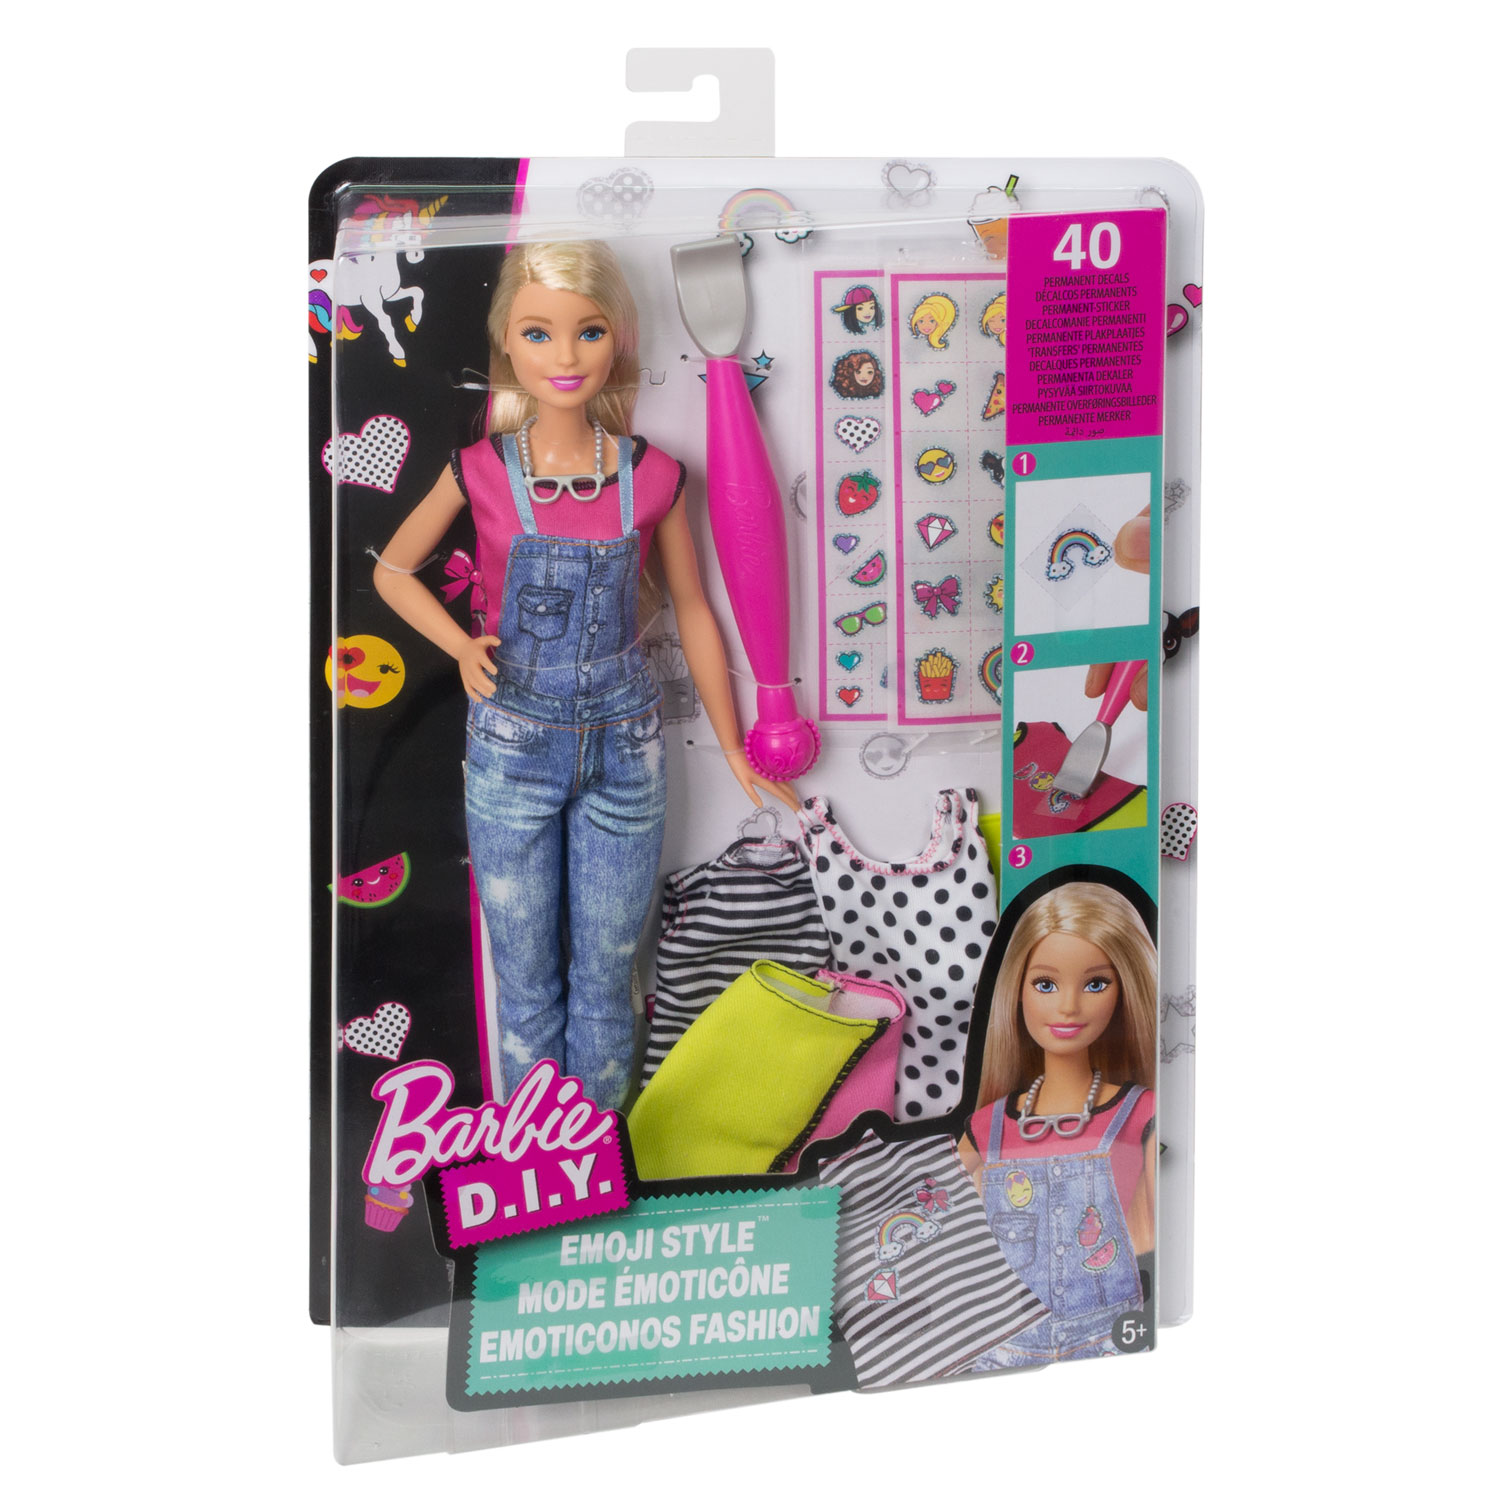 Barbie D.I.Y. Emoji Style Pop